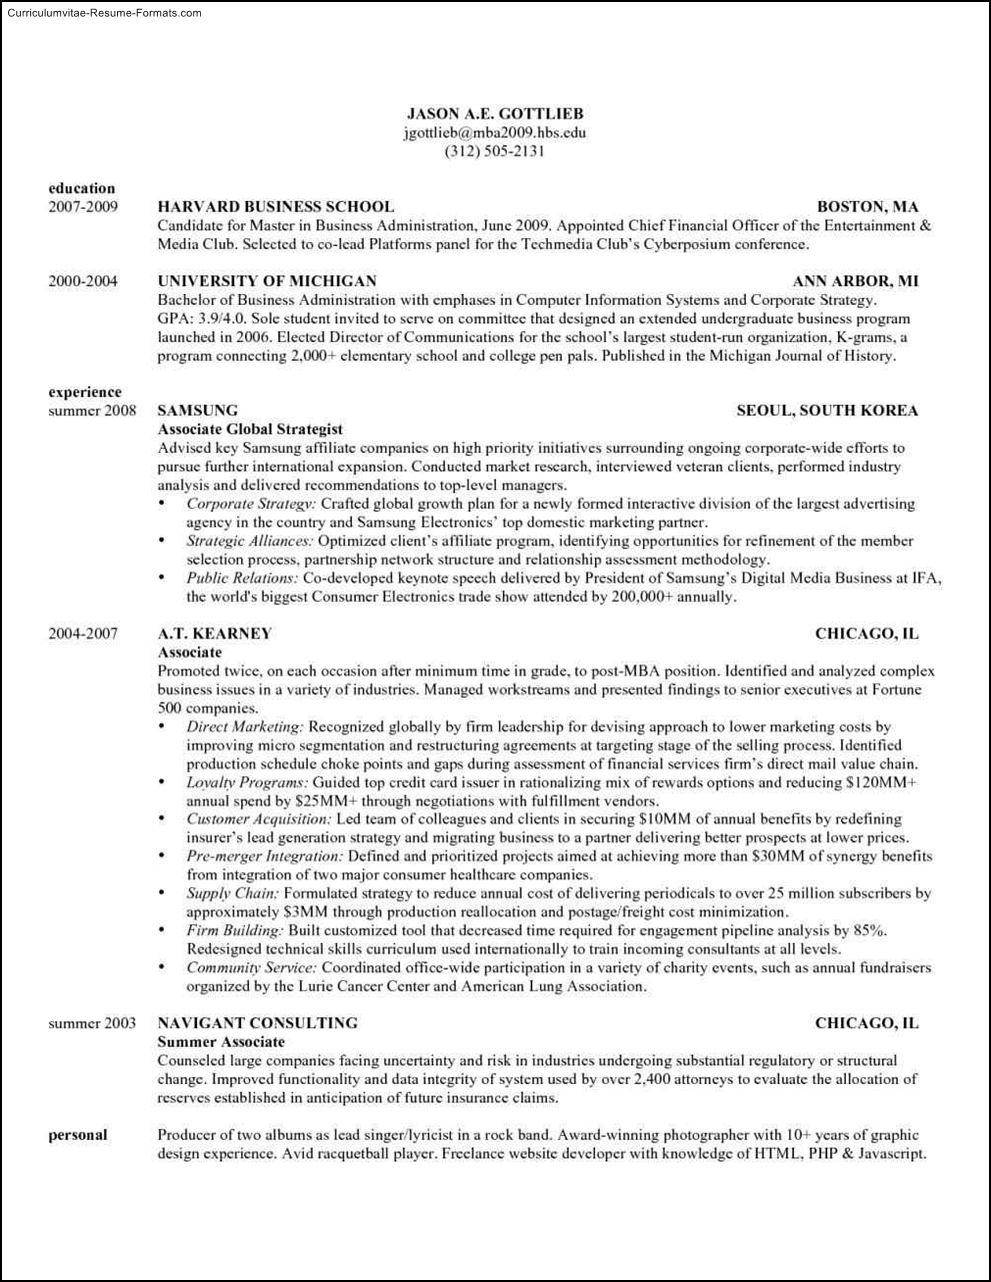 resume template harvard university